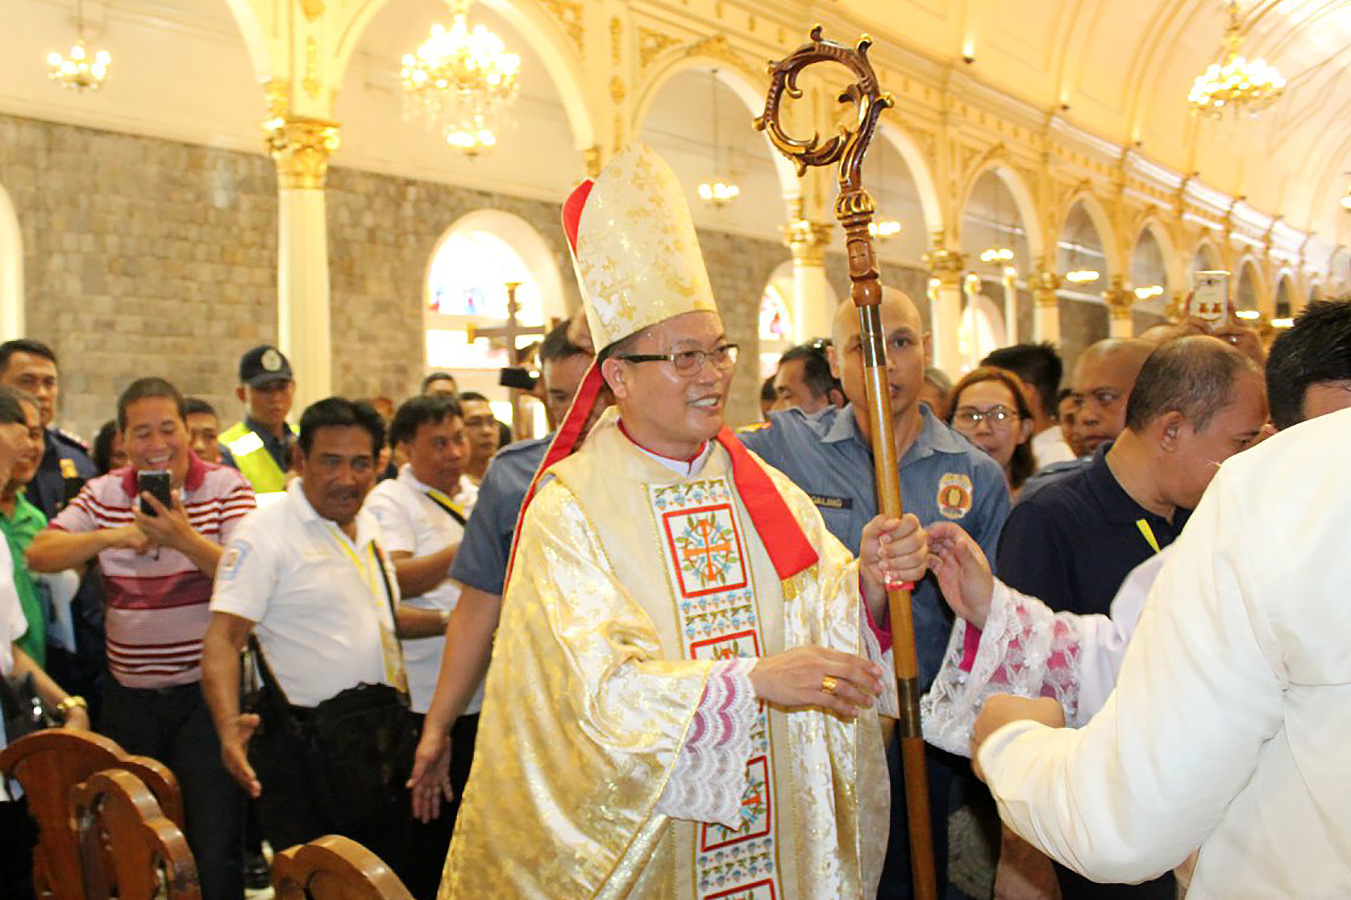 Galbines ordained, installed as bishop of Kabankalan